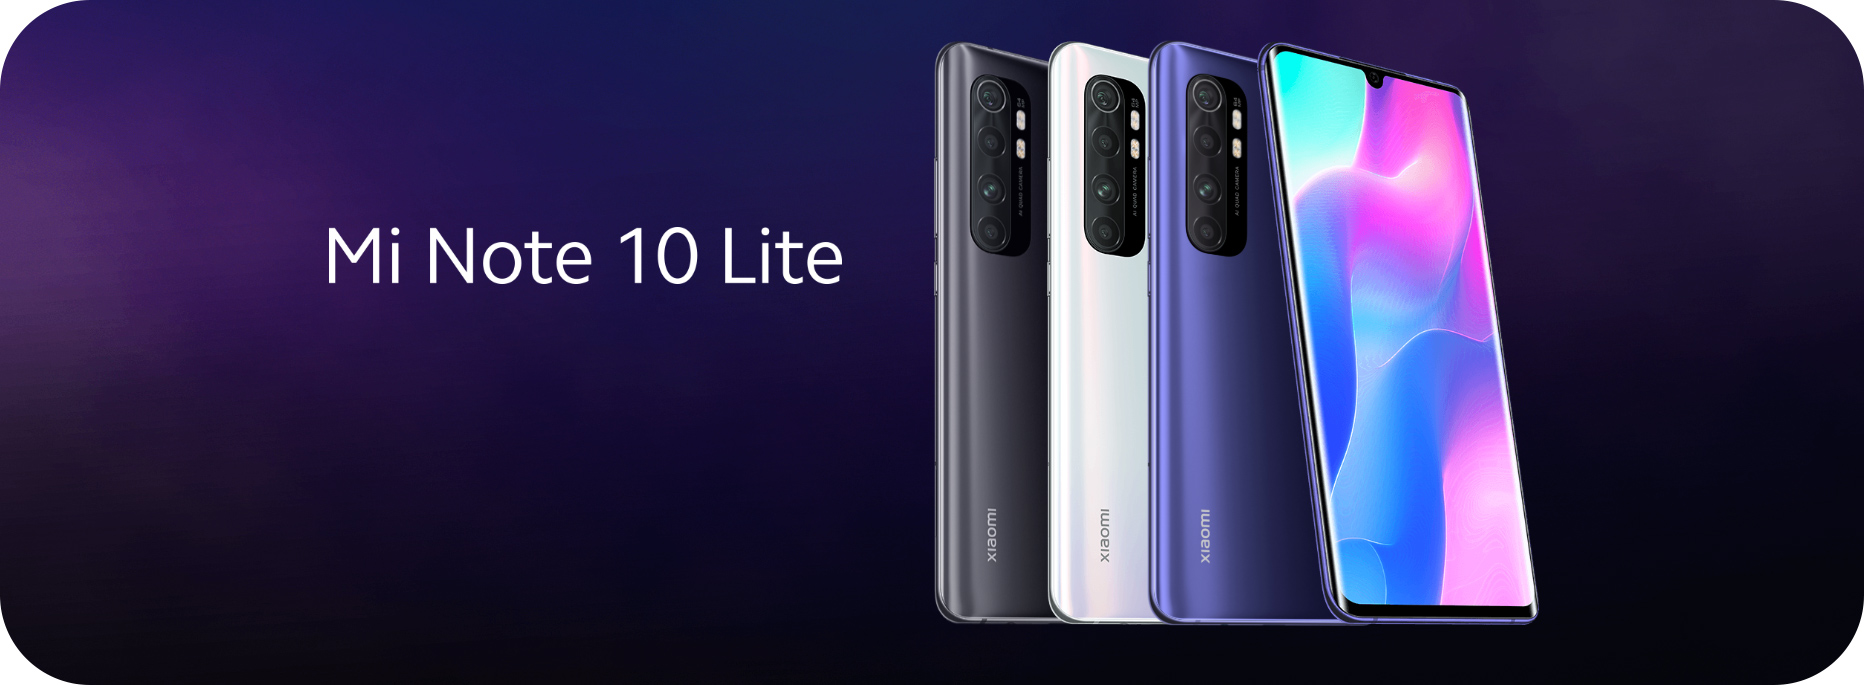 Xiaomi Smartphone Mi Note 10 Lite (8+128) Nebula Purple